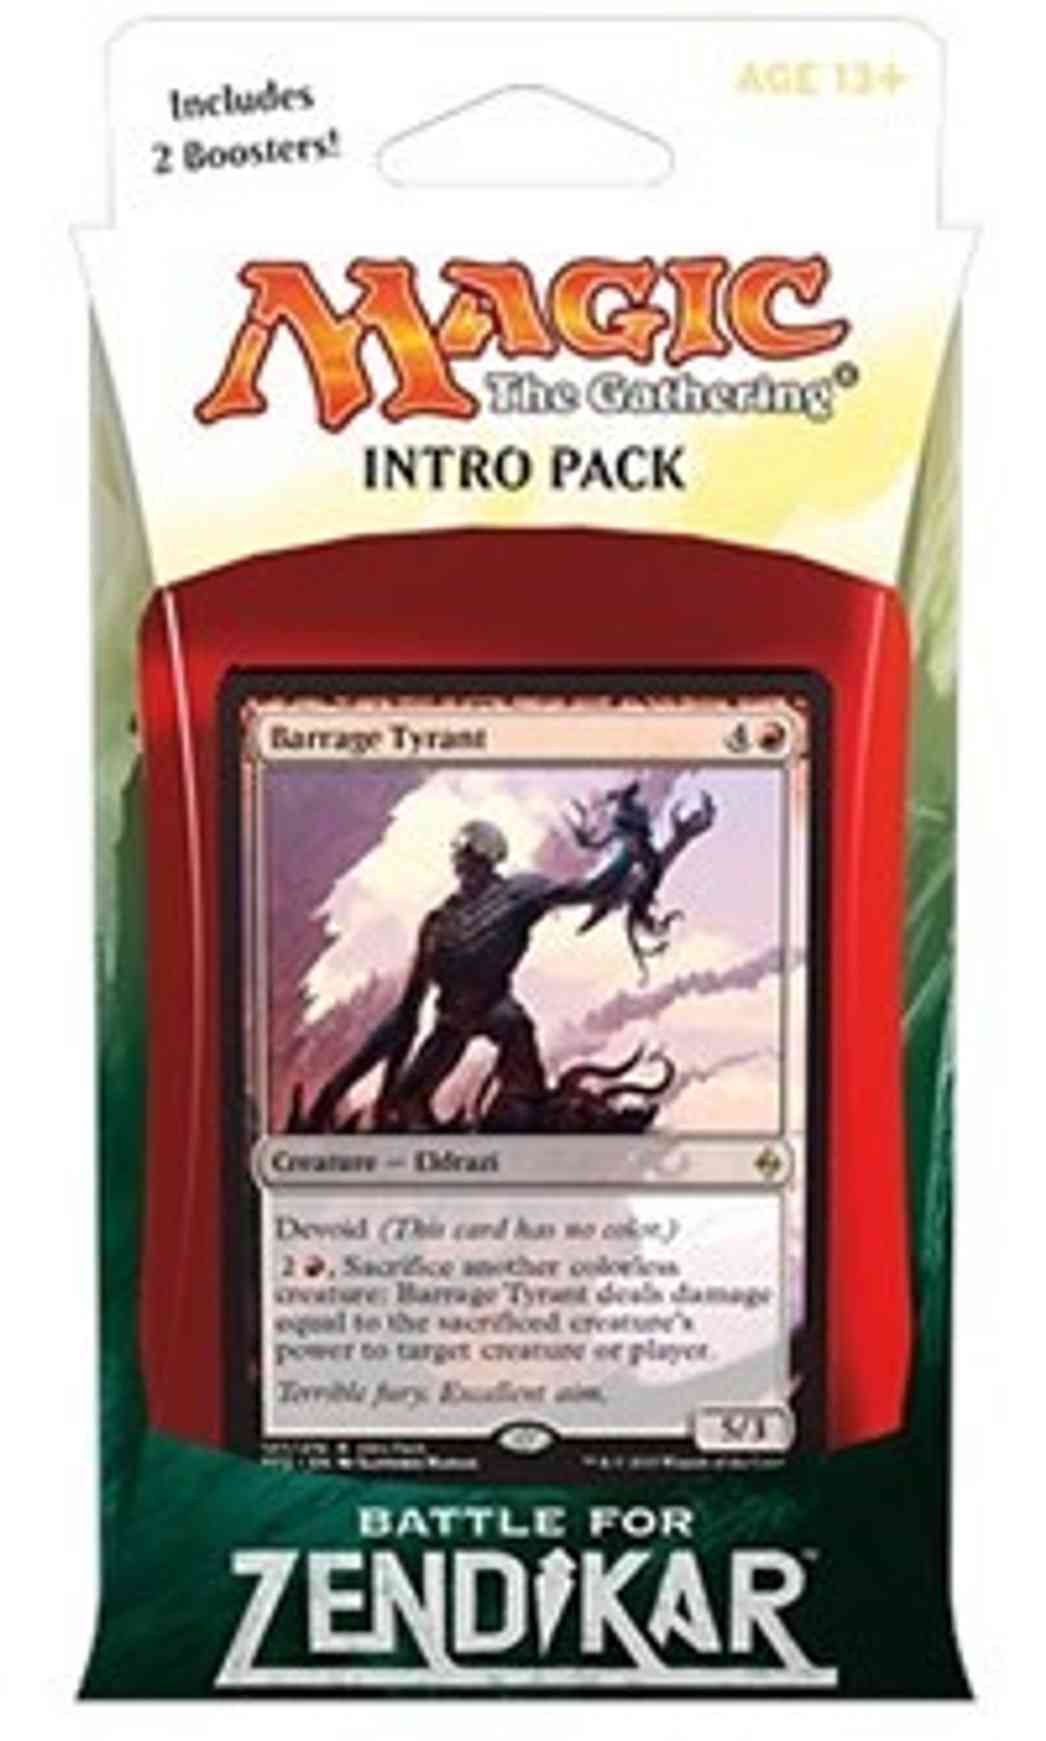 Battle for Zendikar Intro Pack - Red magic card front